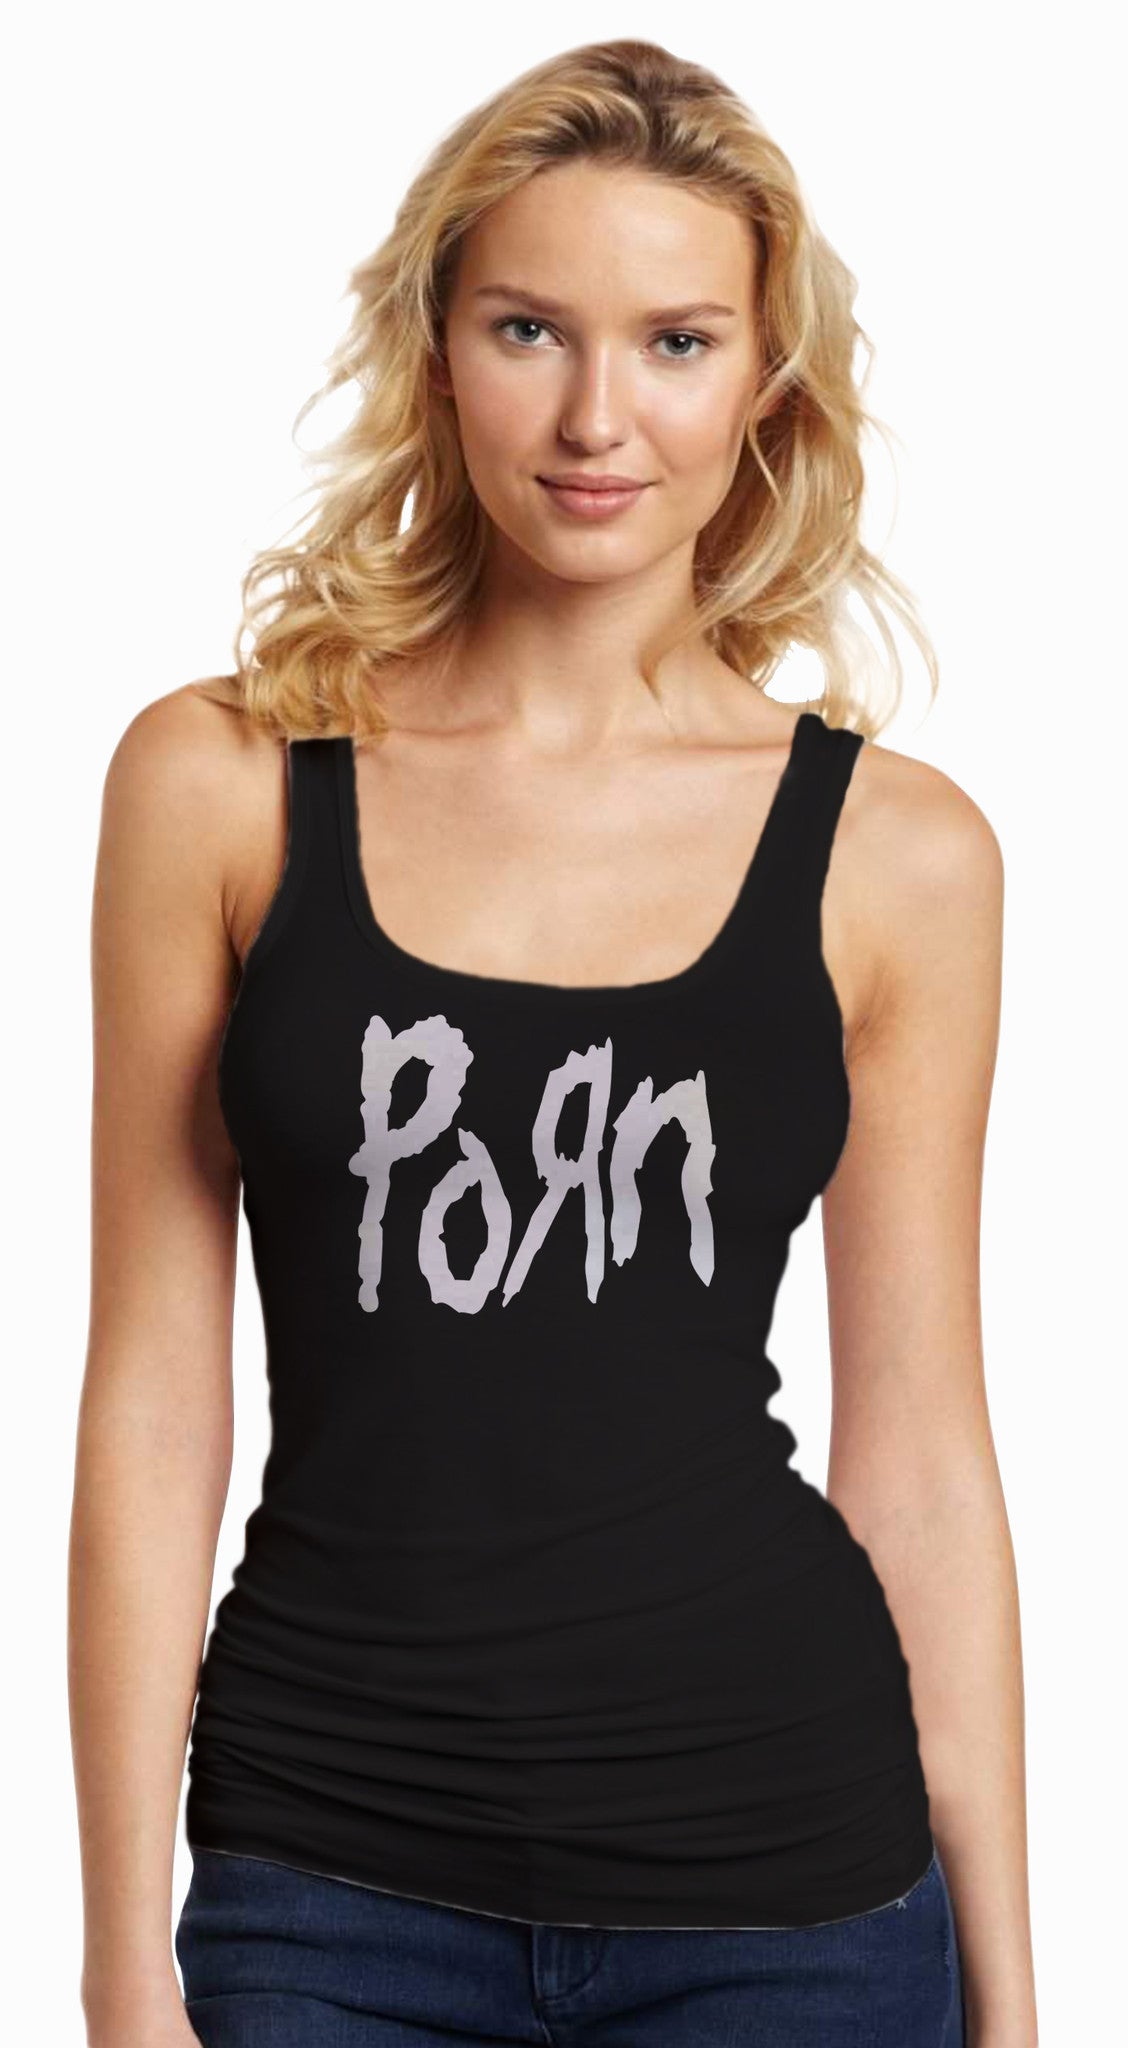 Classic Ladies Porn - Porn Black Tanktop T-shirt for Women